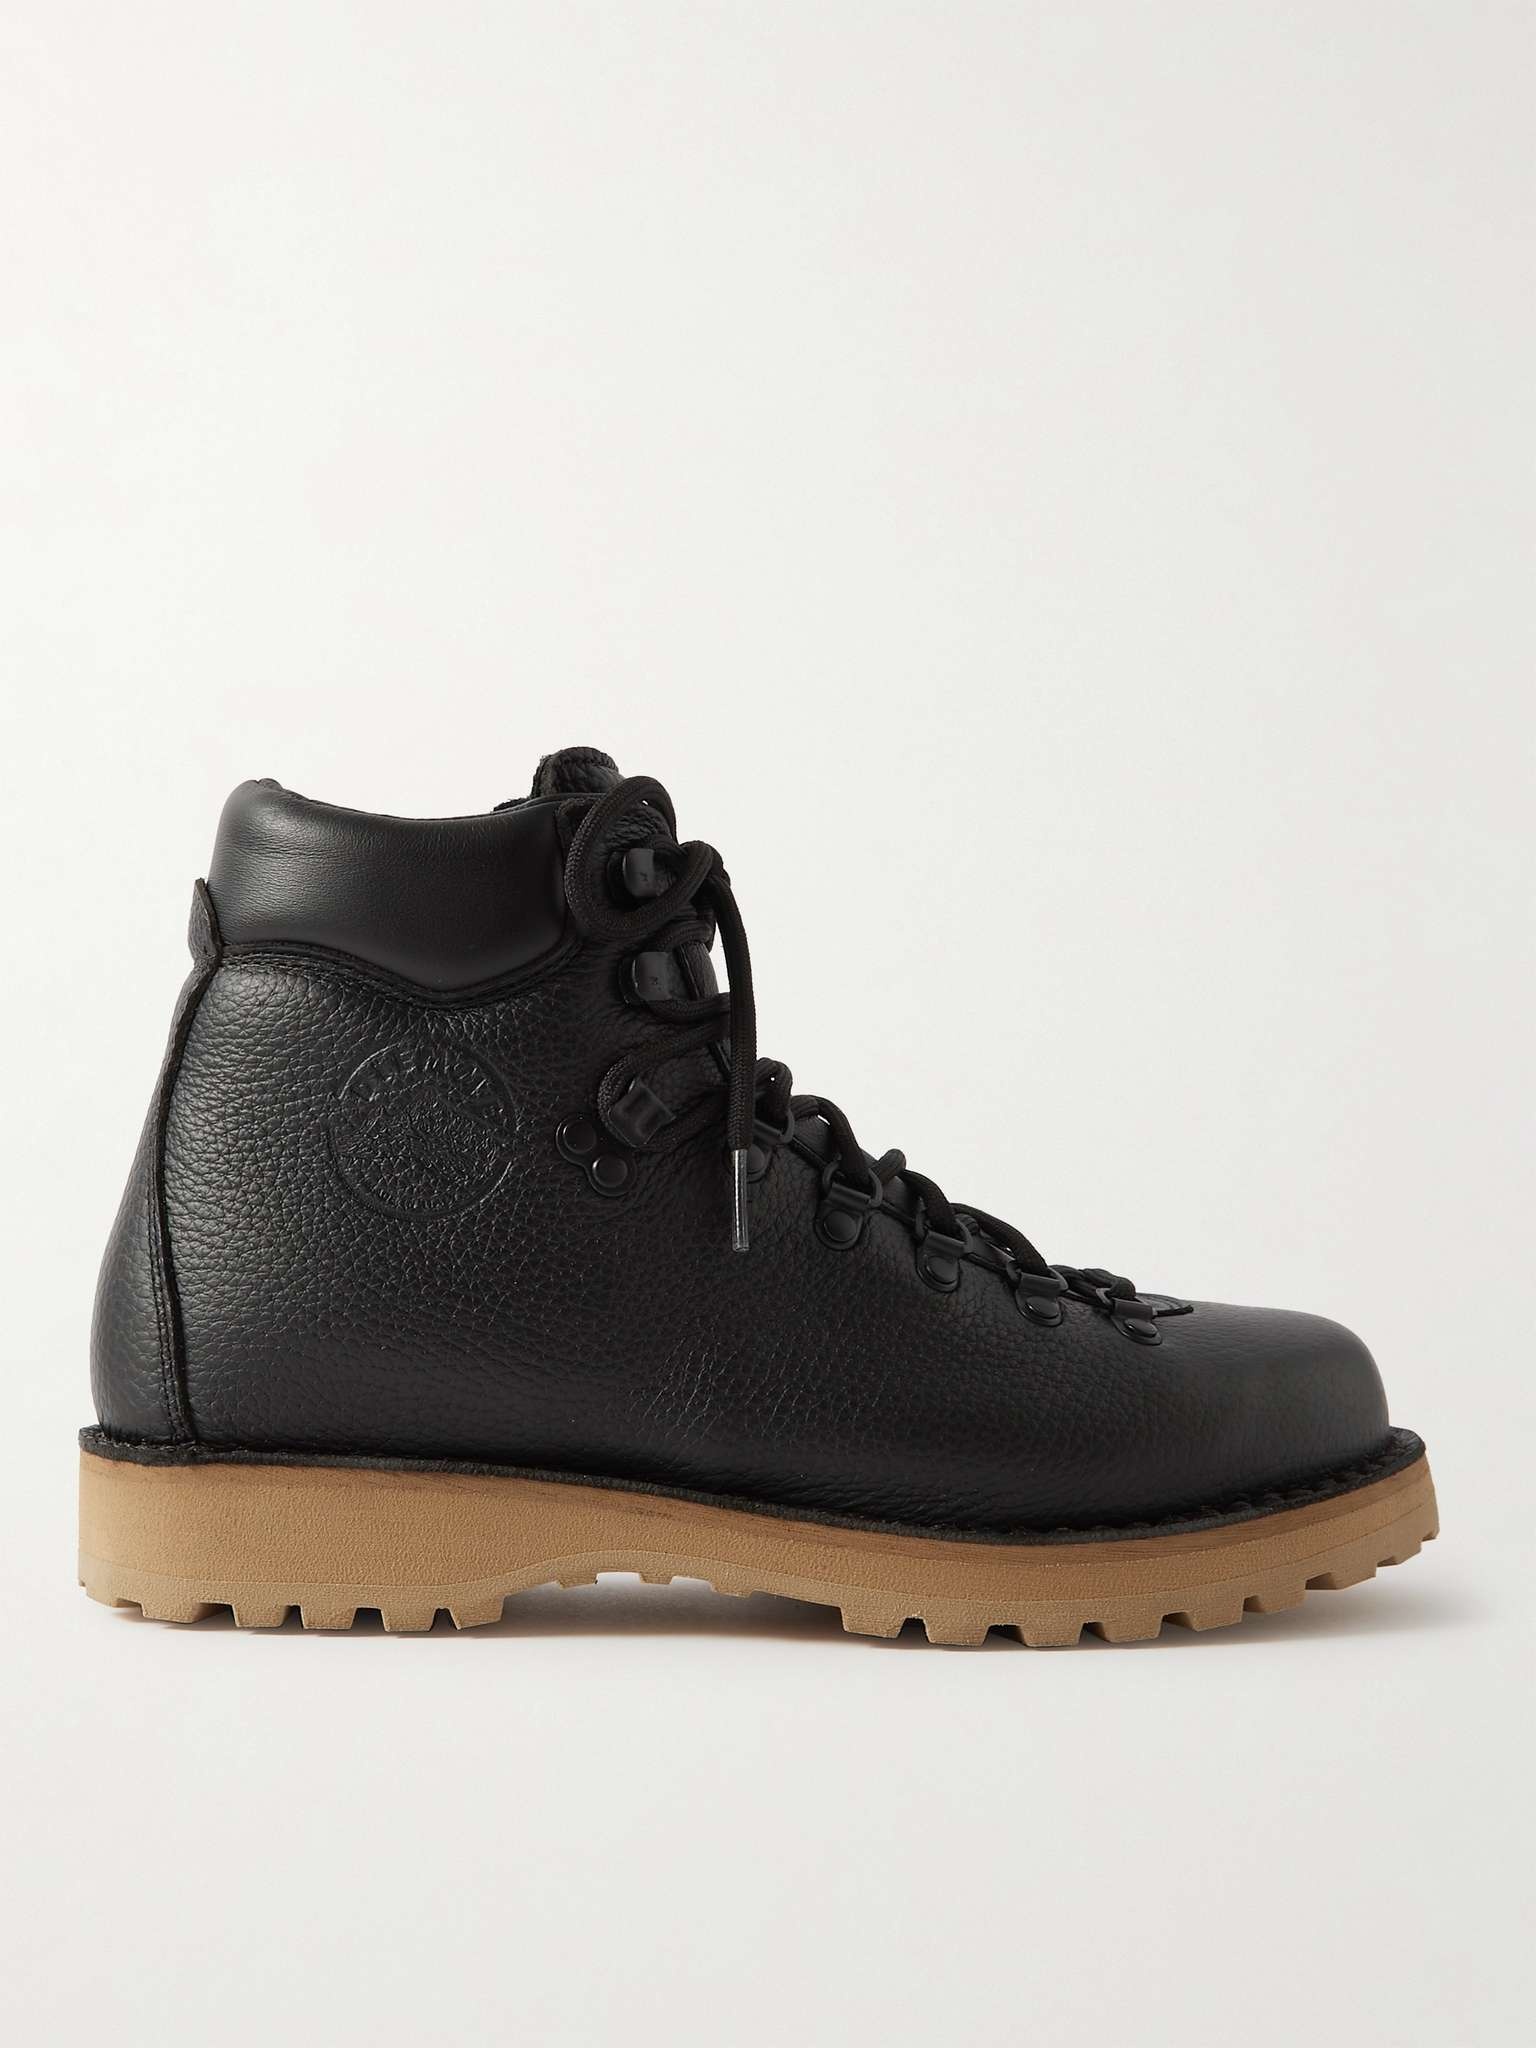 Roccia Vet Full-Grain Leather Hiking Boots - 1